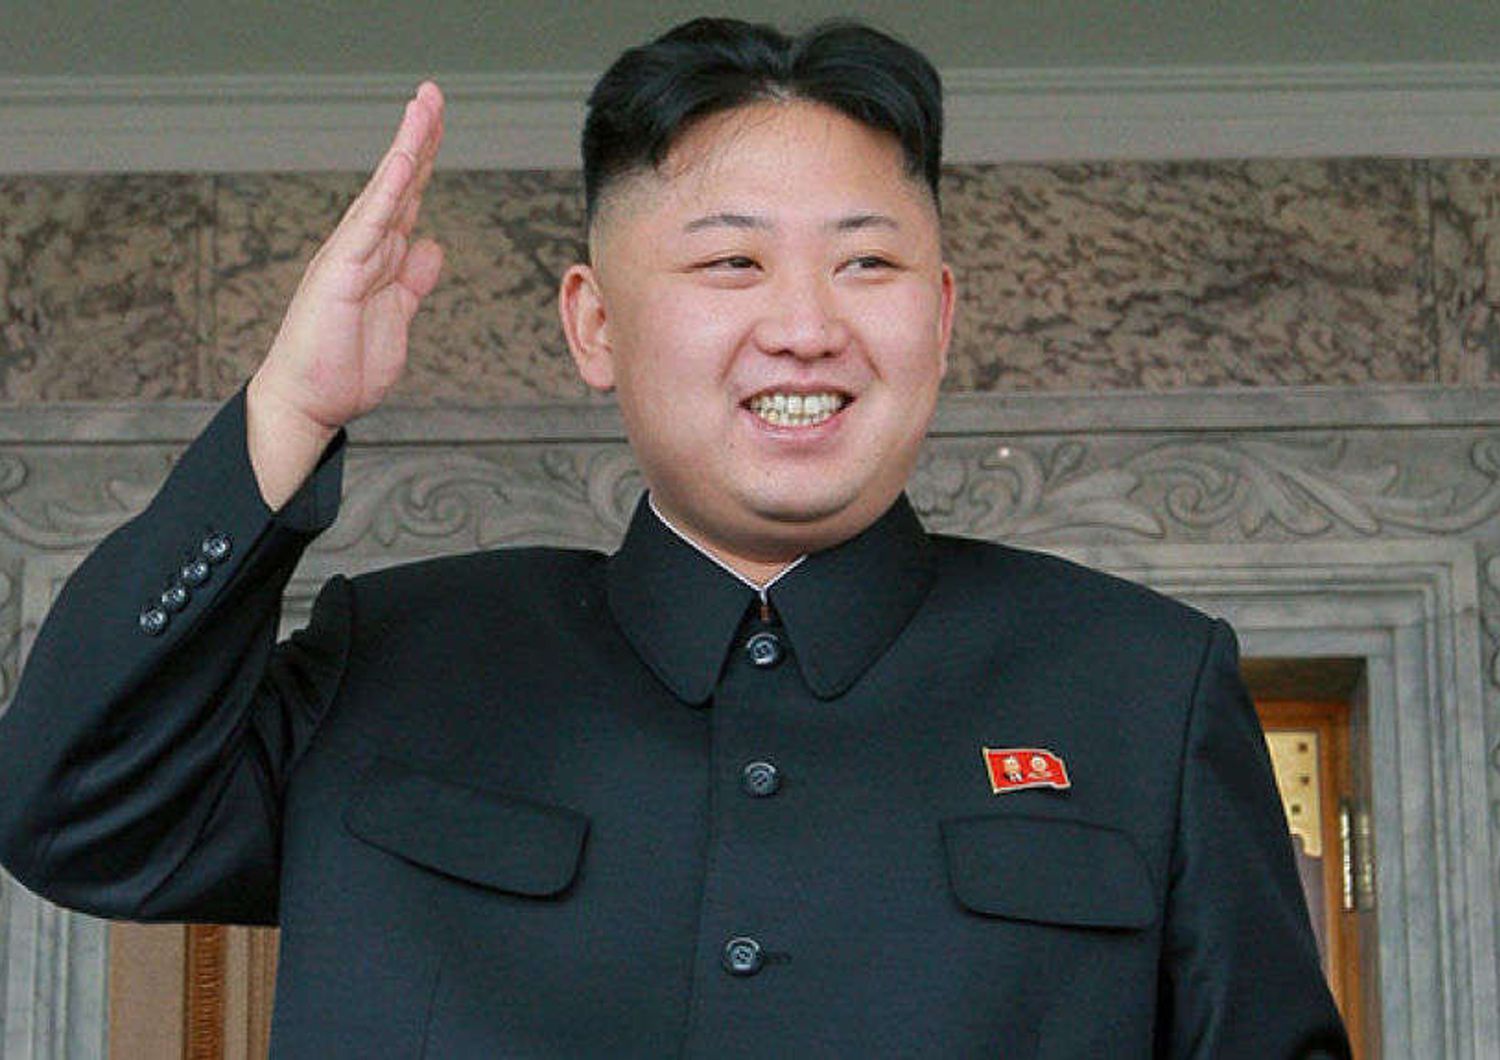 Sony ritira film su Kim Jong Un, "vincono" gli hacker di Pyongyang